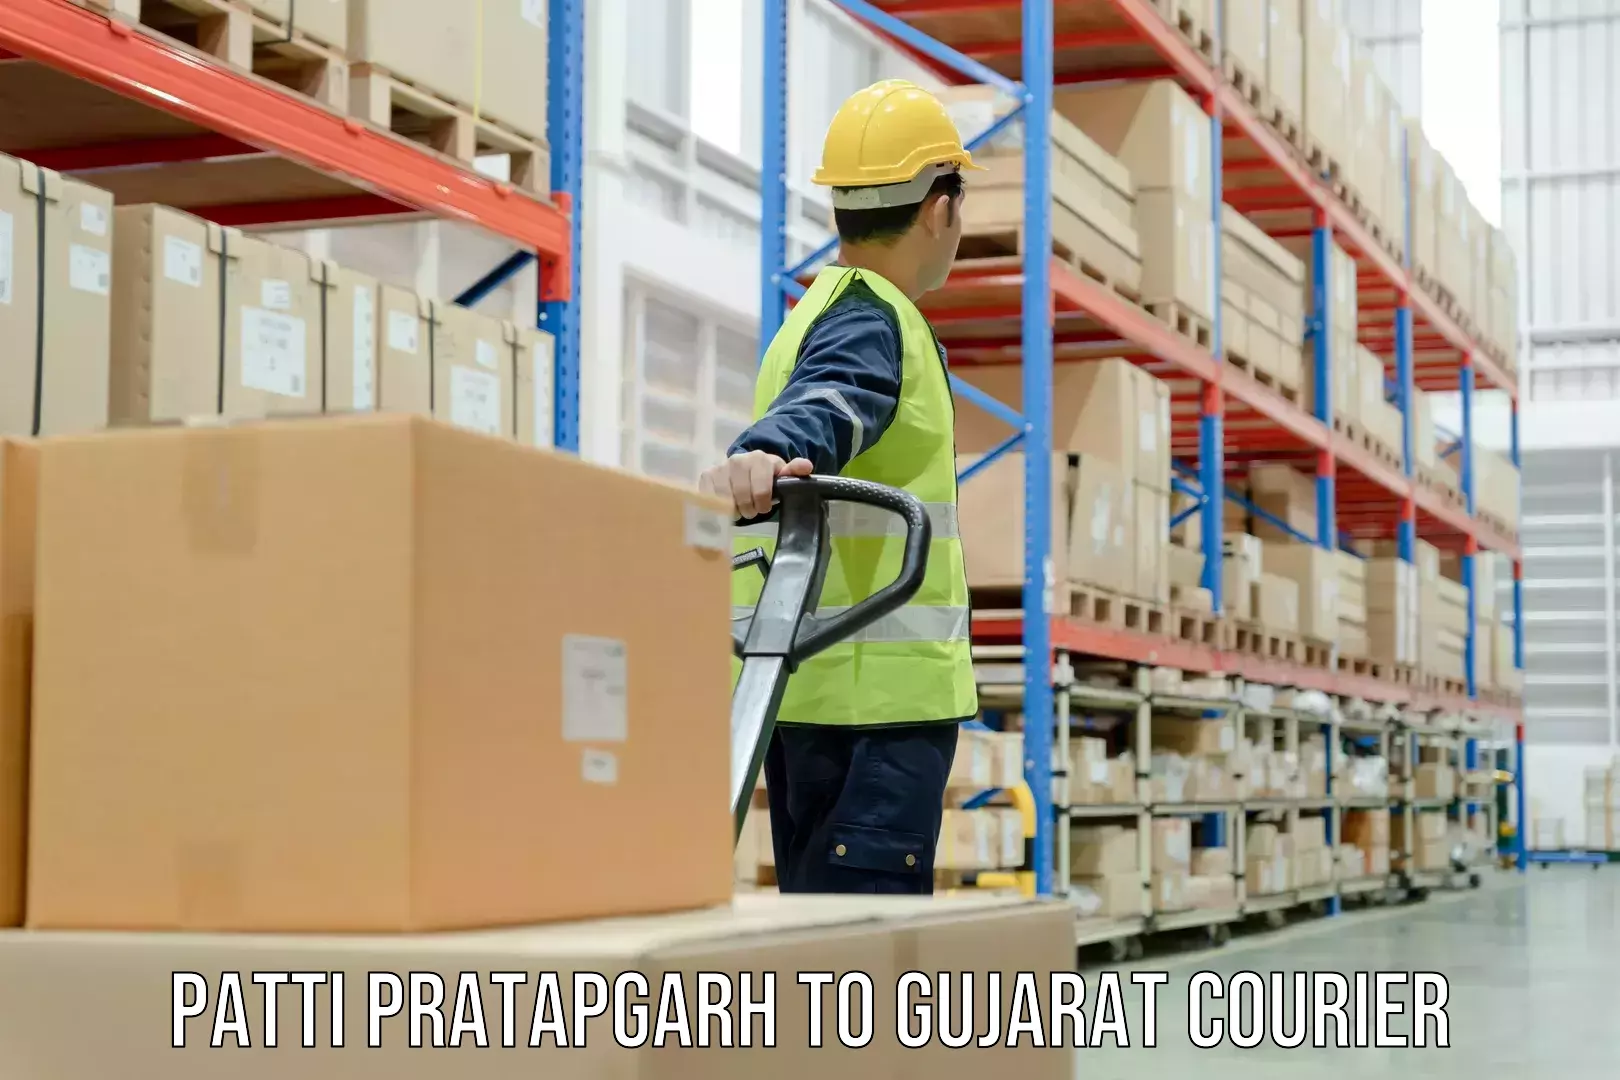 Professional courier handling Patti Pratapgarh to Modasa